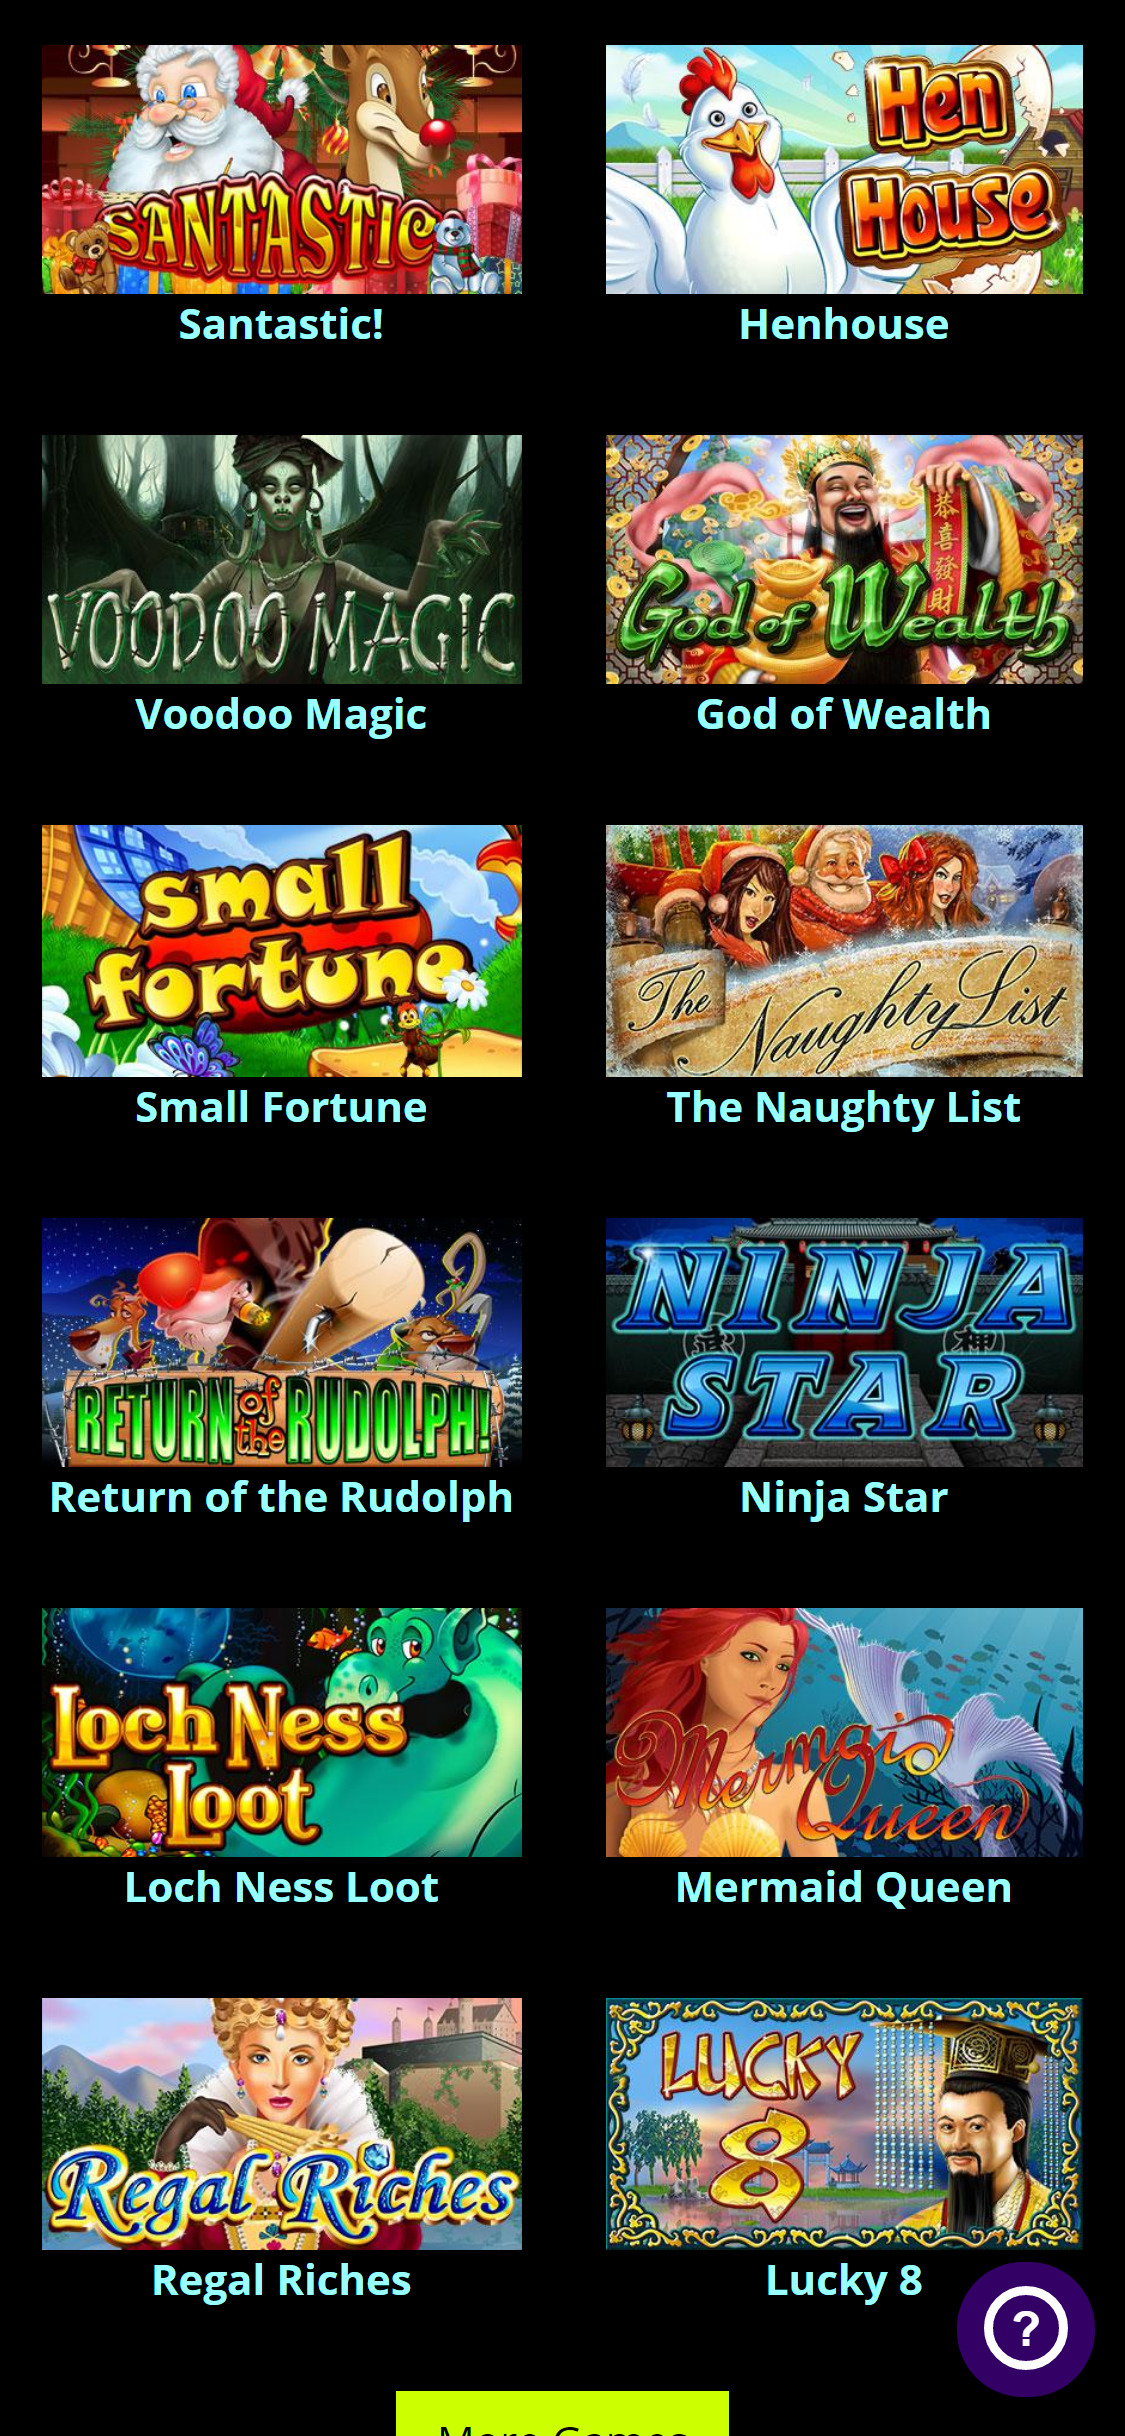 Dreams Casino Mobile Games Review